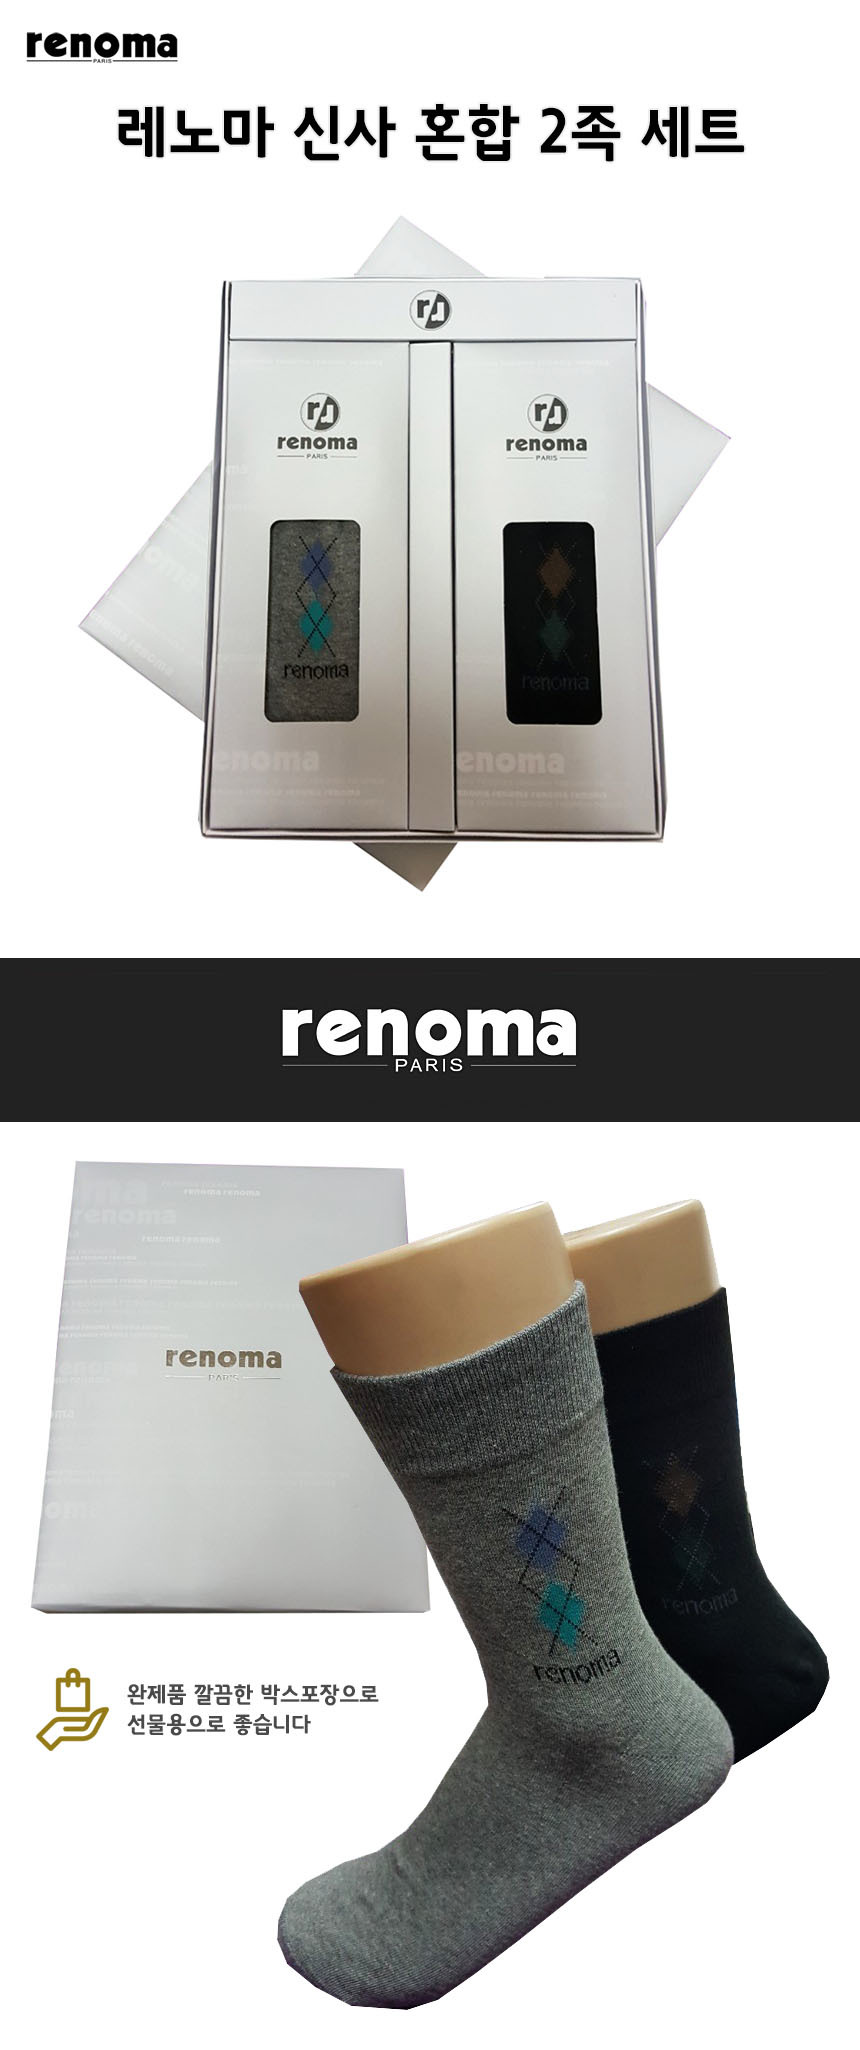 renoma_socks_m2_1.jpg